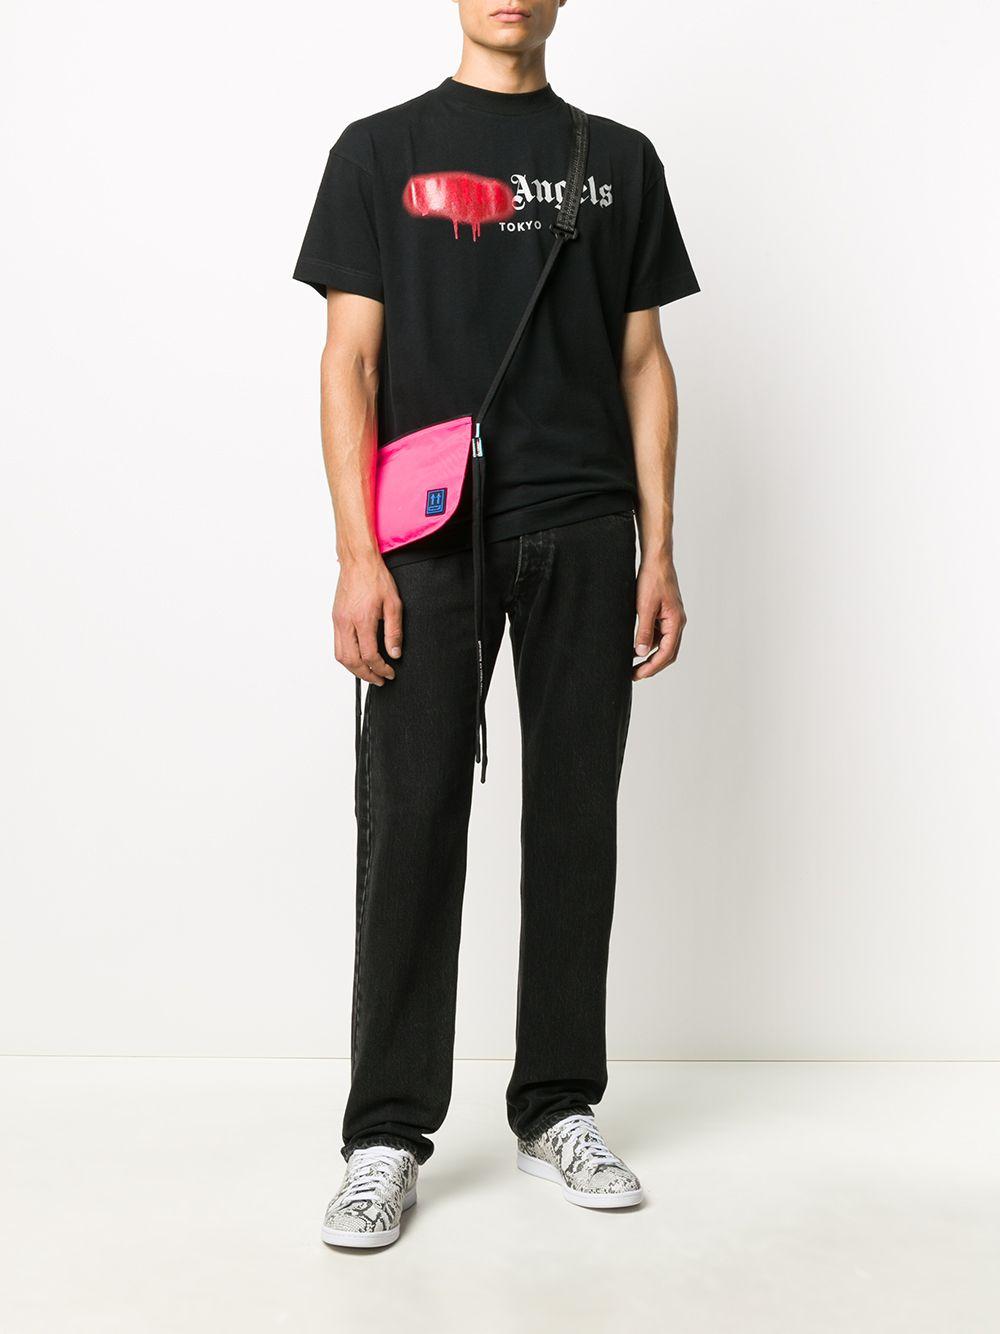 Palm Angels Cotton Tokyo Sprayed T-shirt in Black/Red (Black) for Men ...